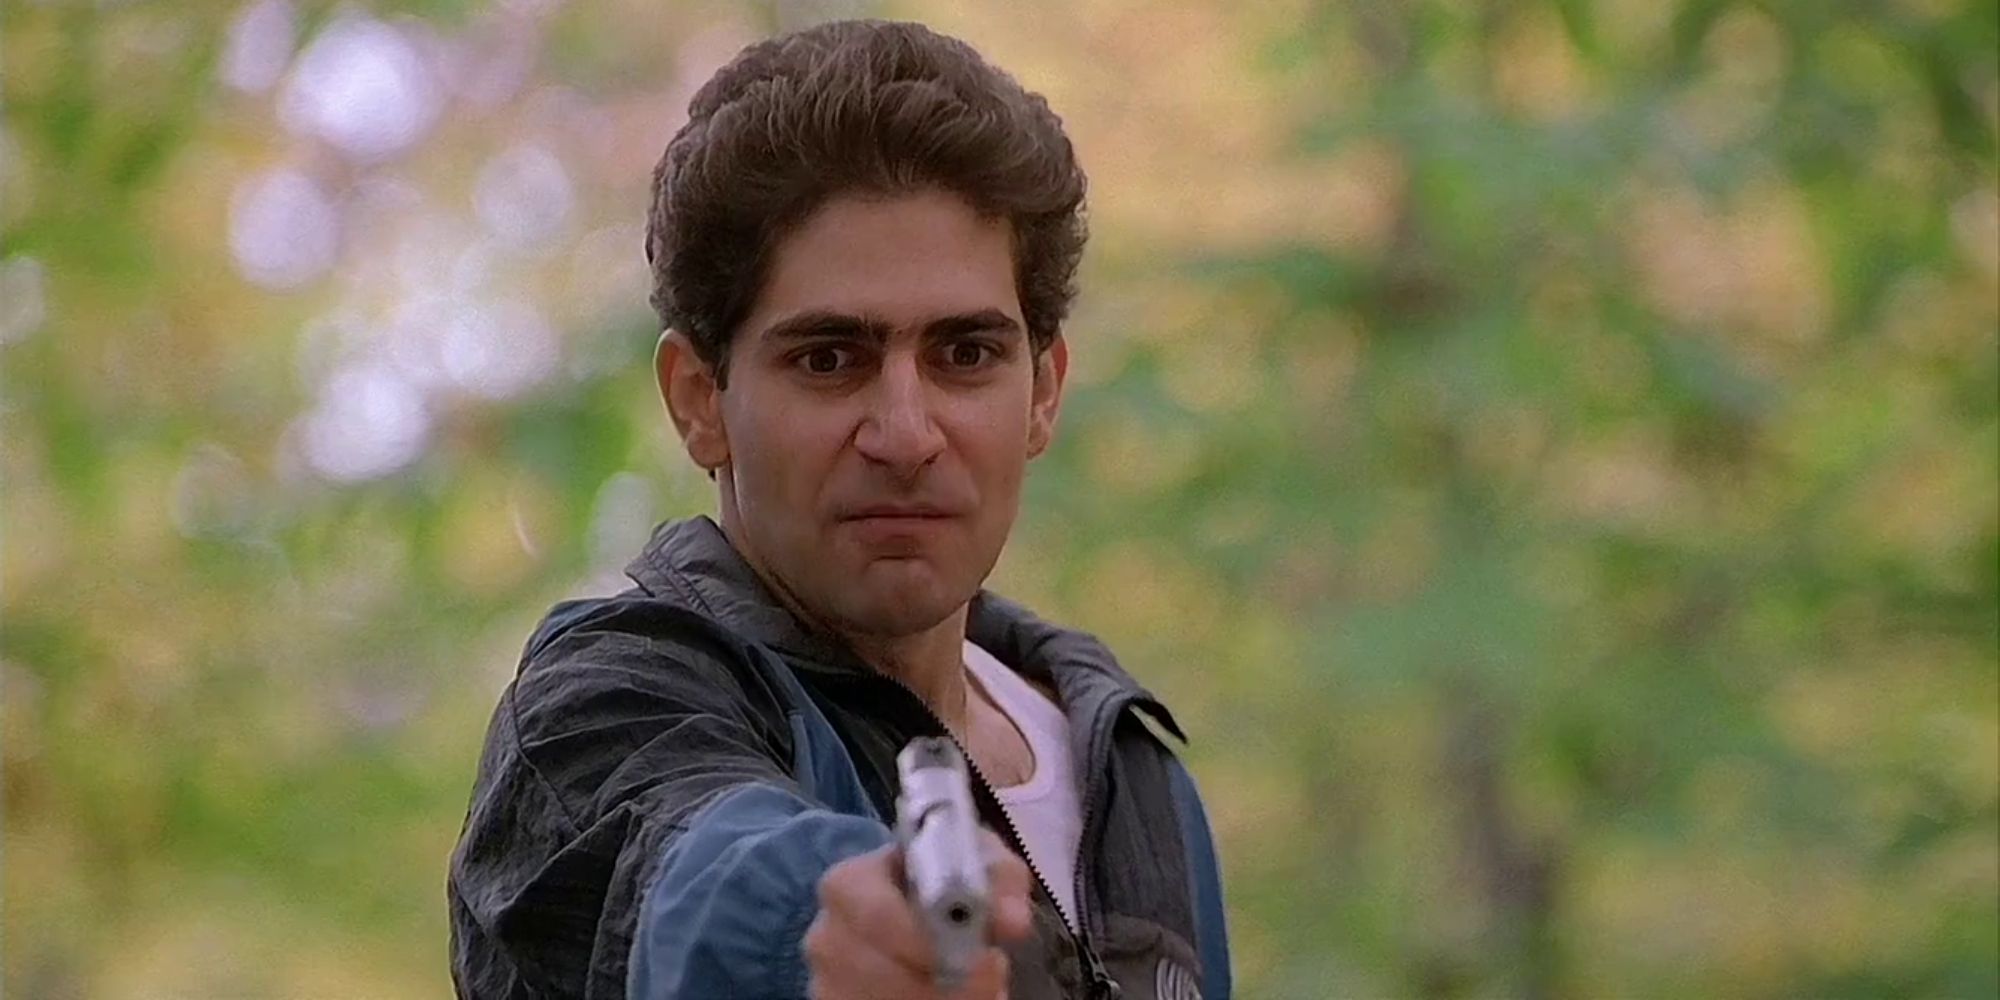 Michael Imperioli as Christopher Moltisanti aiming a gun at someone off-camera in the Sopranos